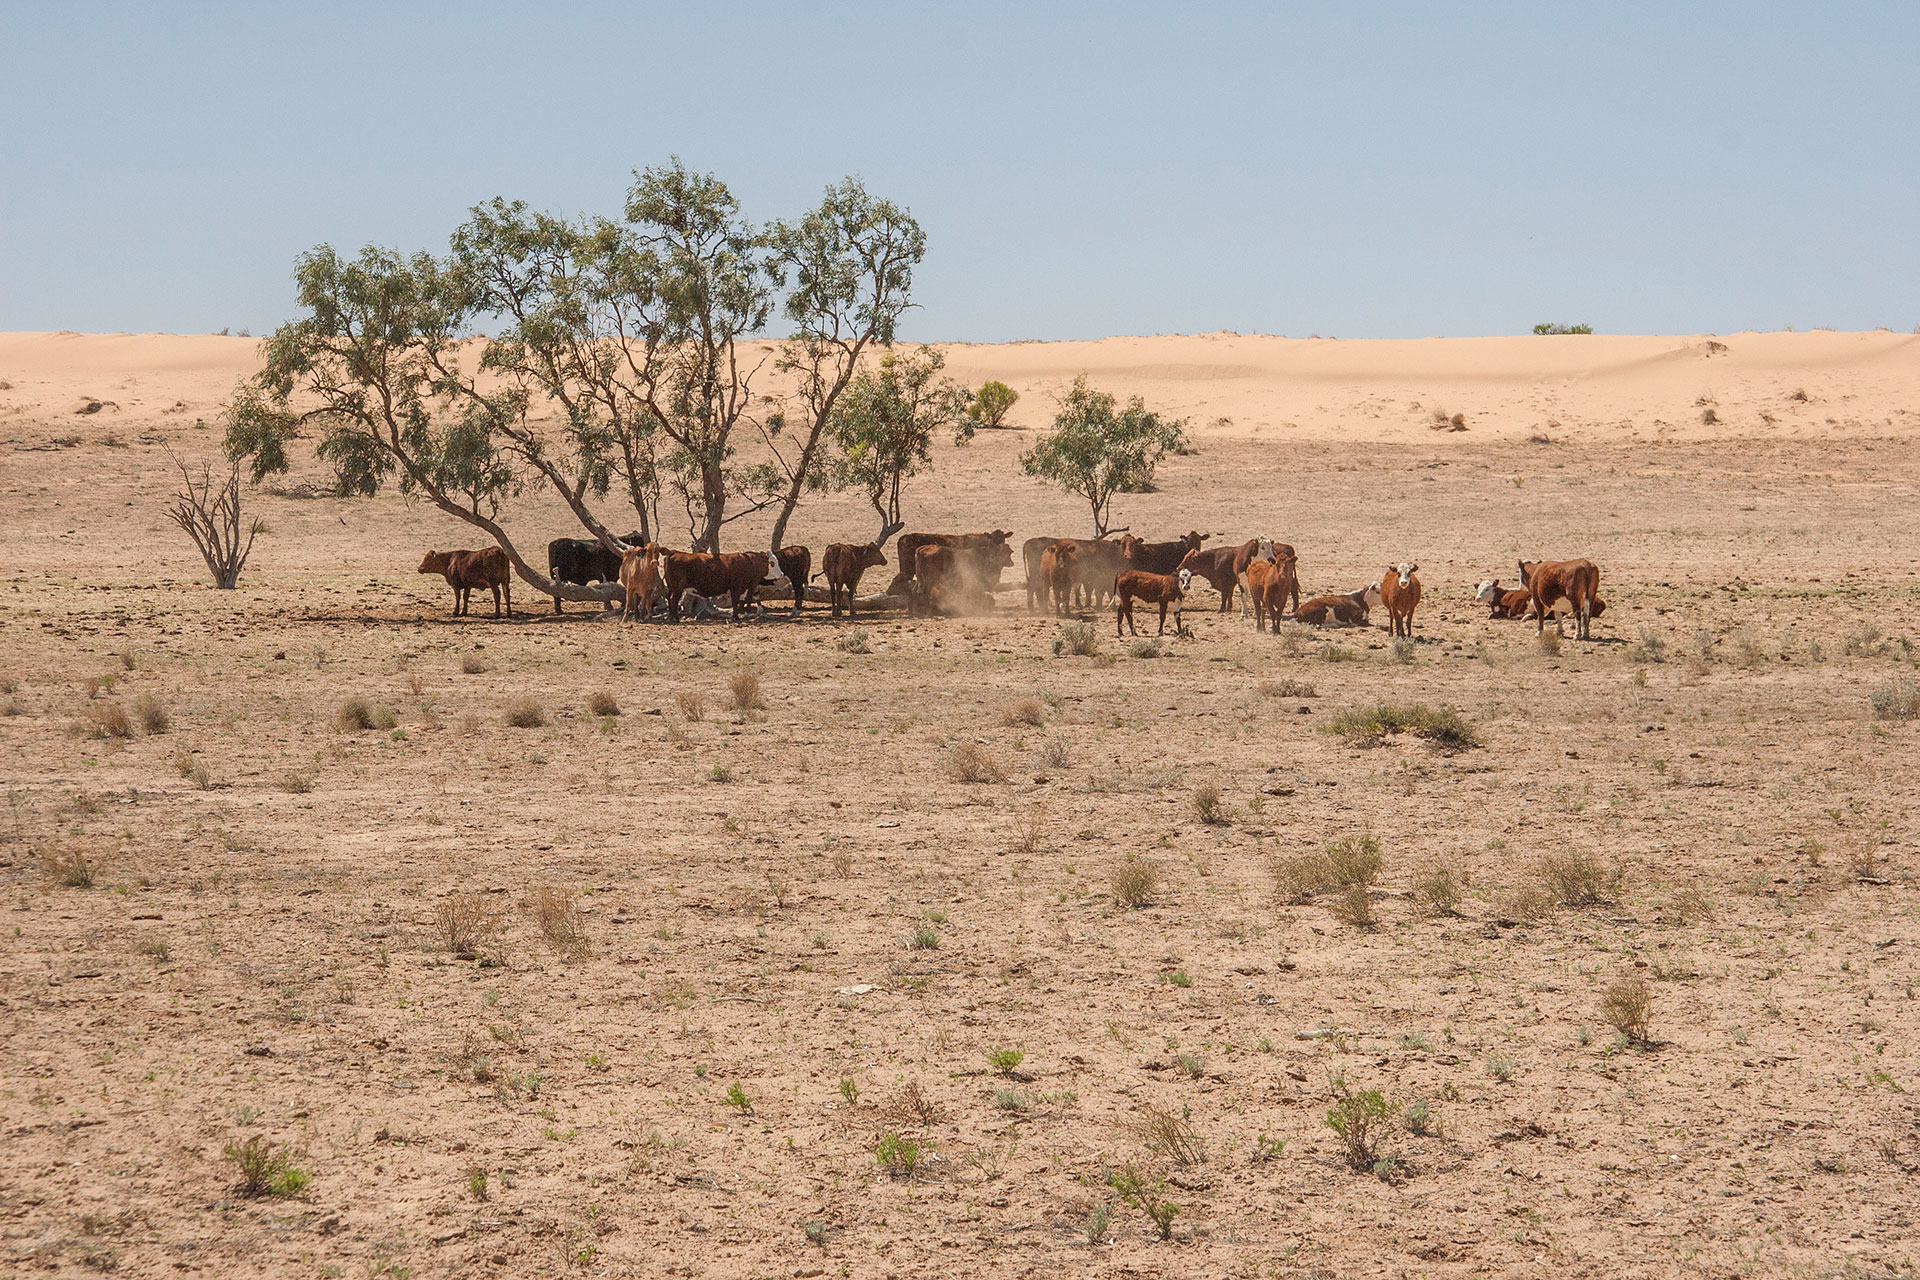 The surrounding cattle is seeking shade.